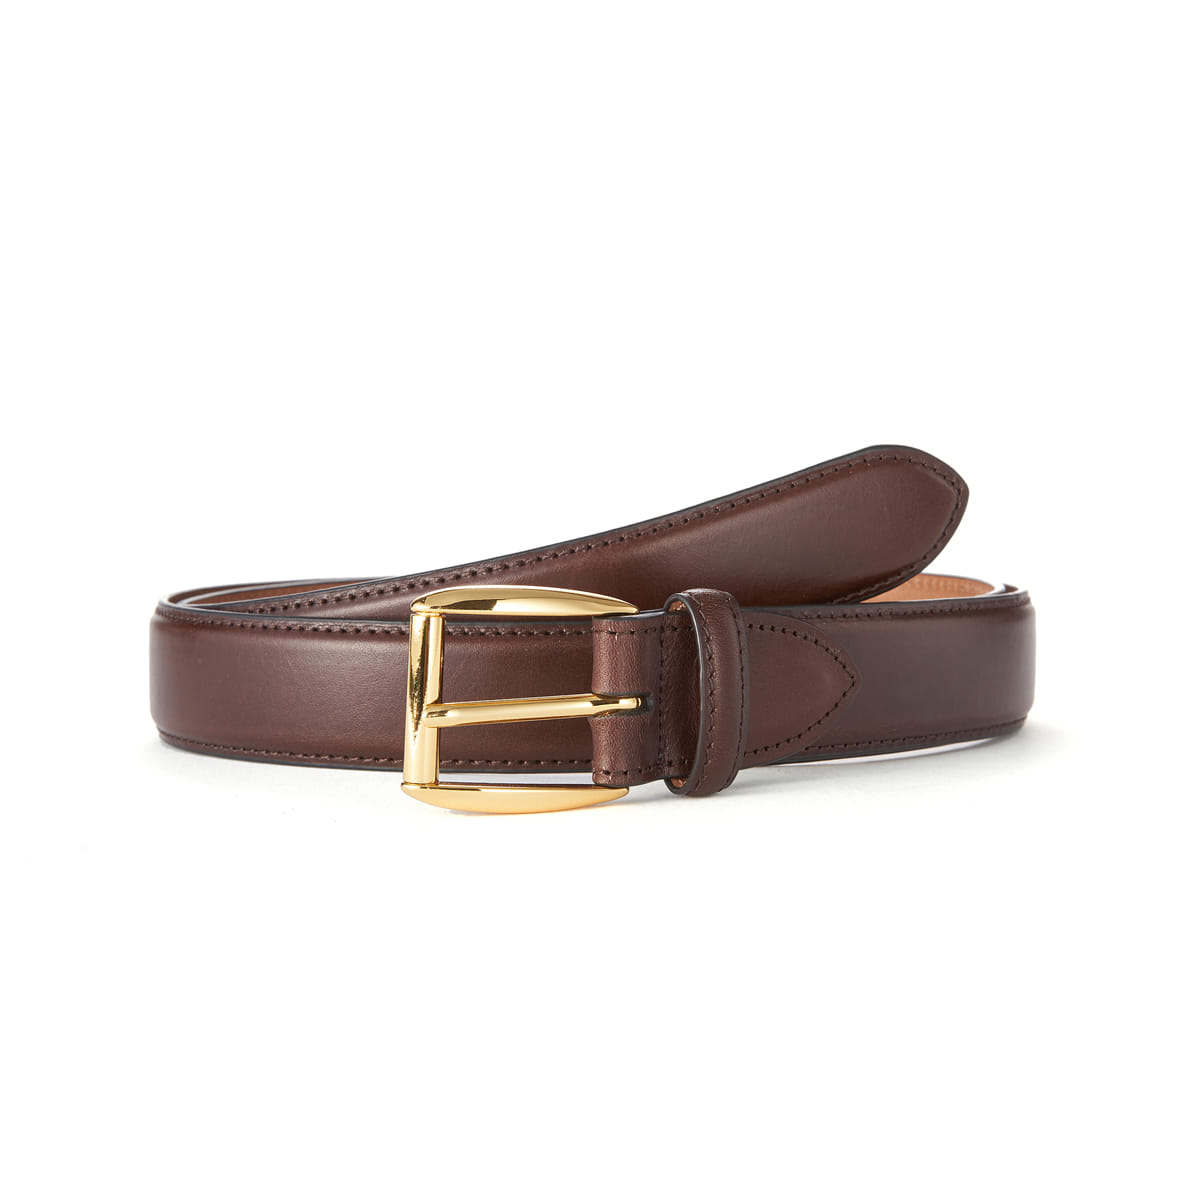 Dk brown Leather Belt (Gold Buckle)